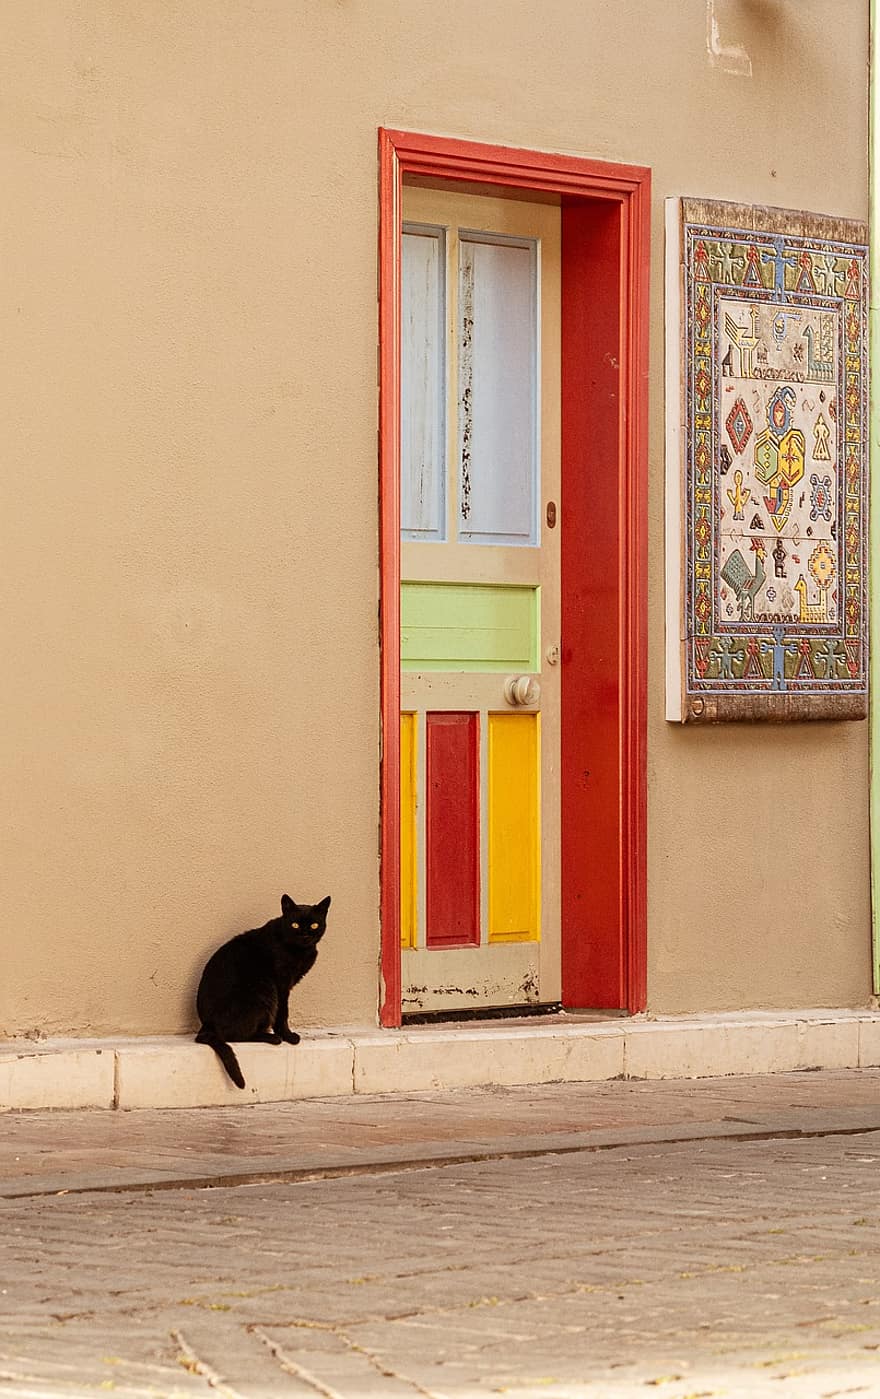 Антальи, кошка, улица, Турция, Старый город, утро, окно, Домашняя кошка, архитектура, дверь, экстерьер здания